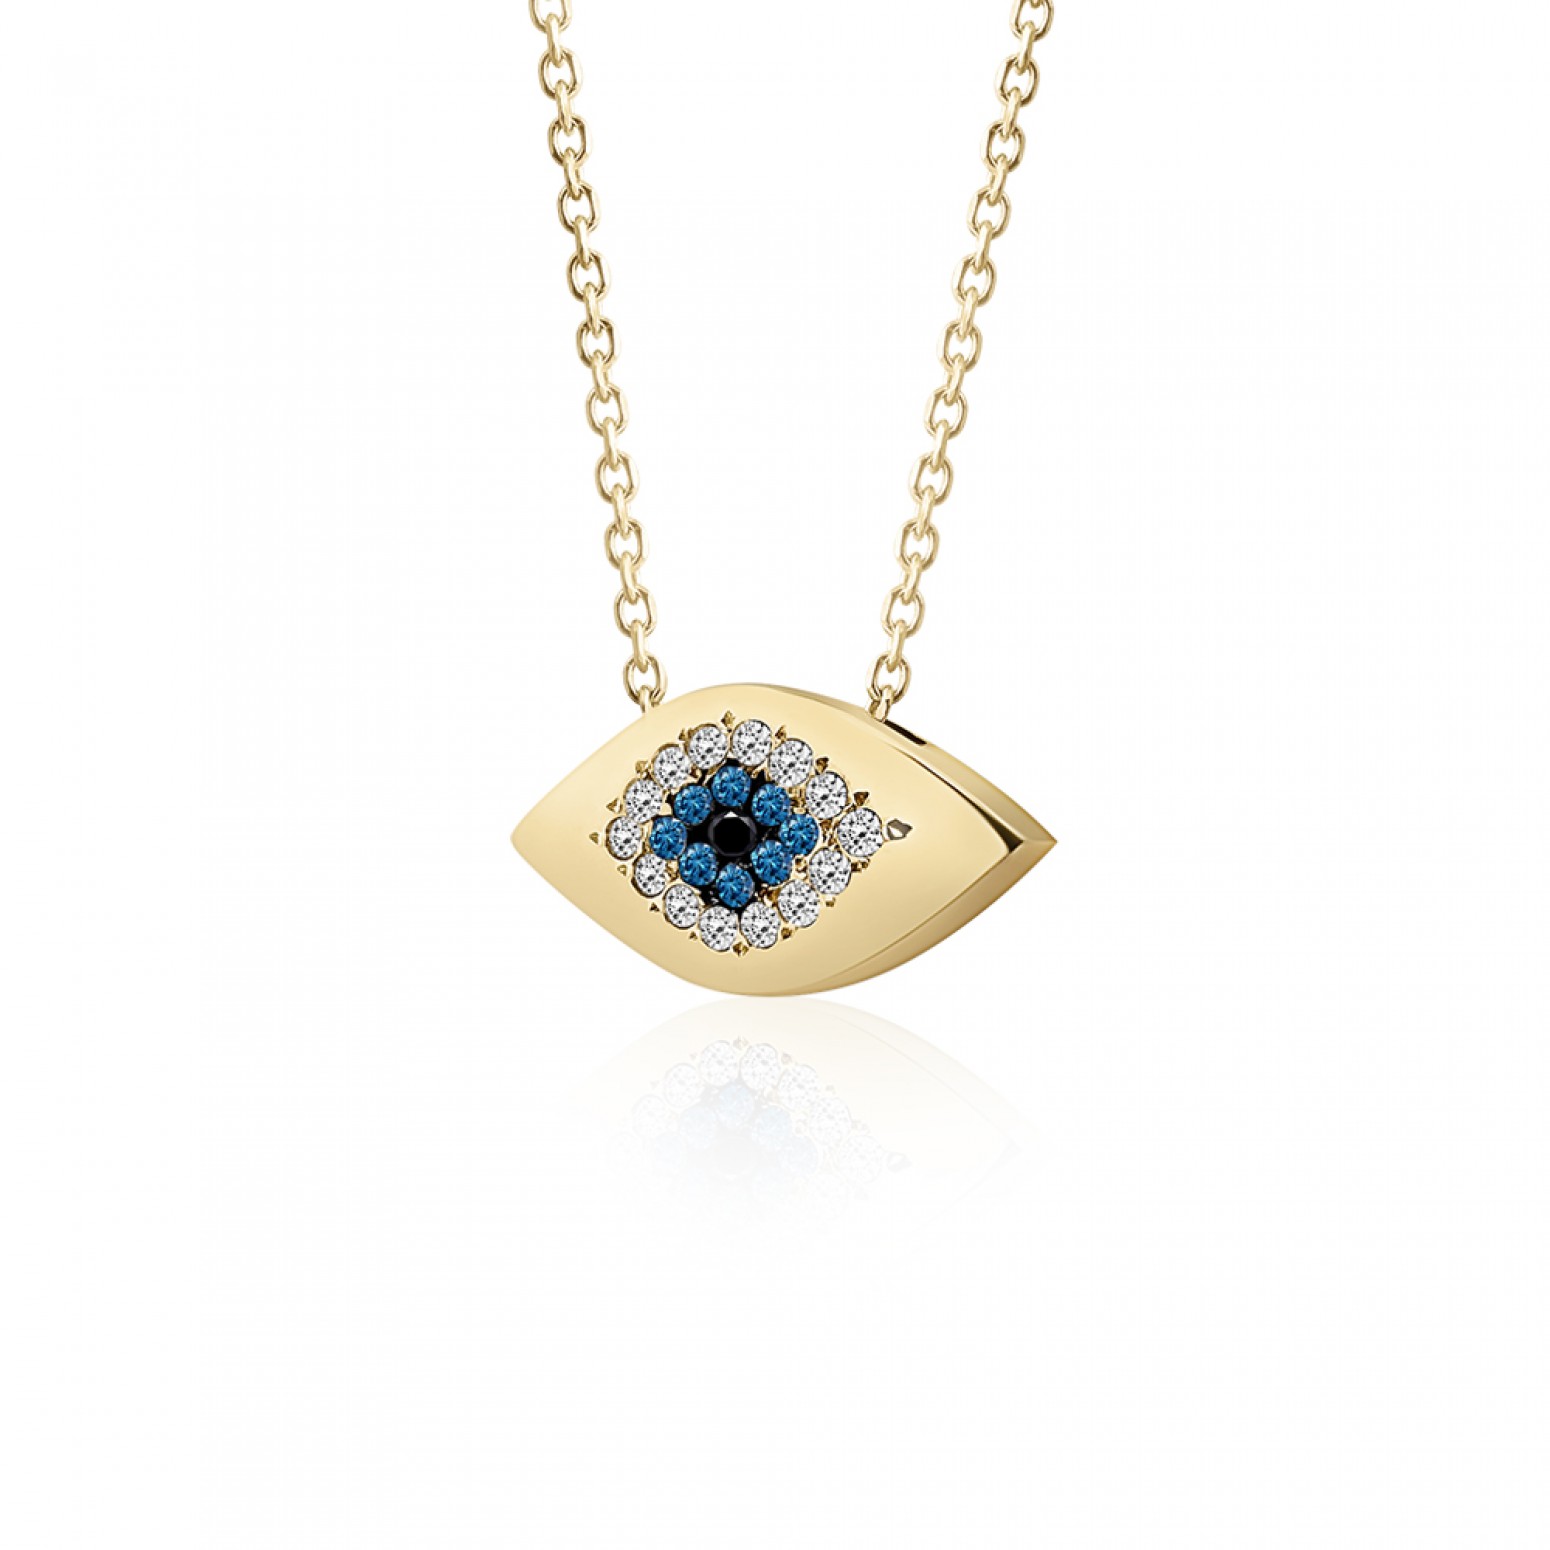 Eye necklace, Κ14 gold with white, blue and black zircon, ko5490 NECKLACES Κοσμηματα - chrilia.gr